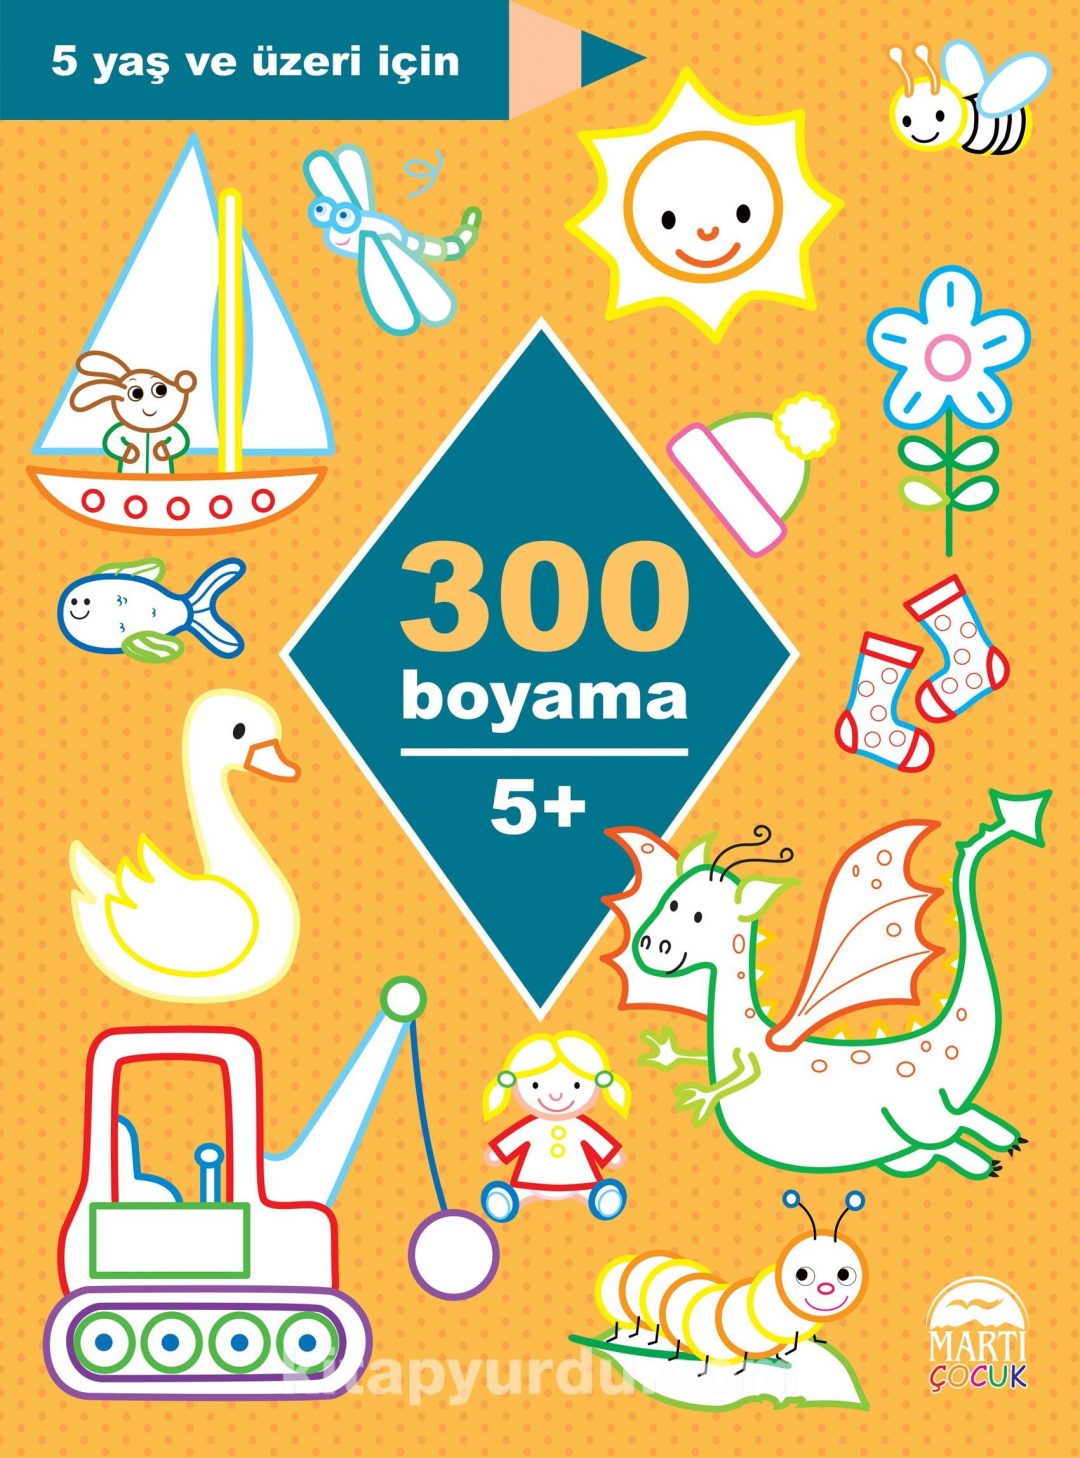 300 Boyama (5+ Yaş)